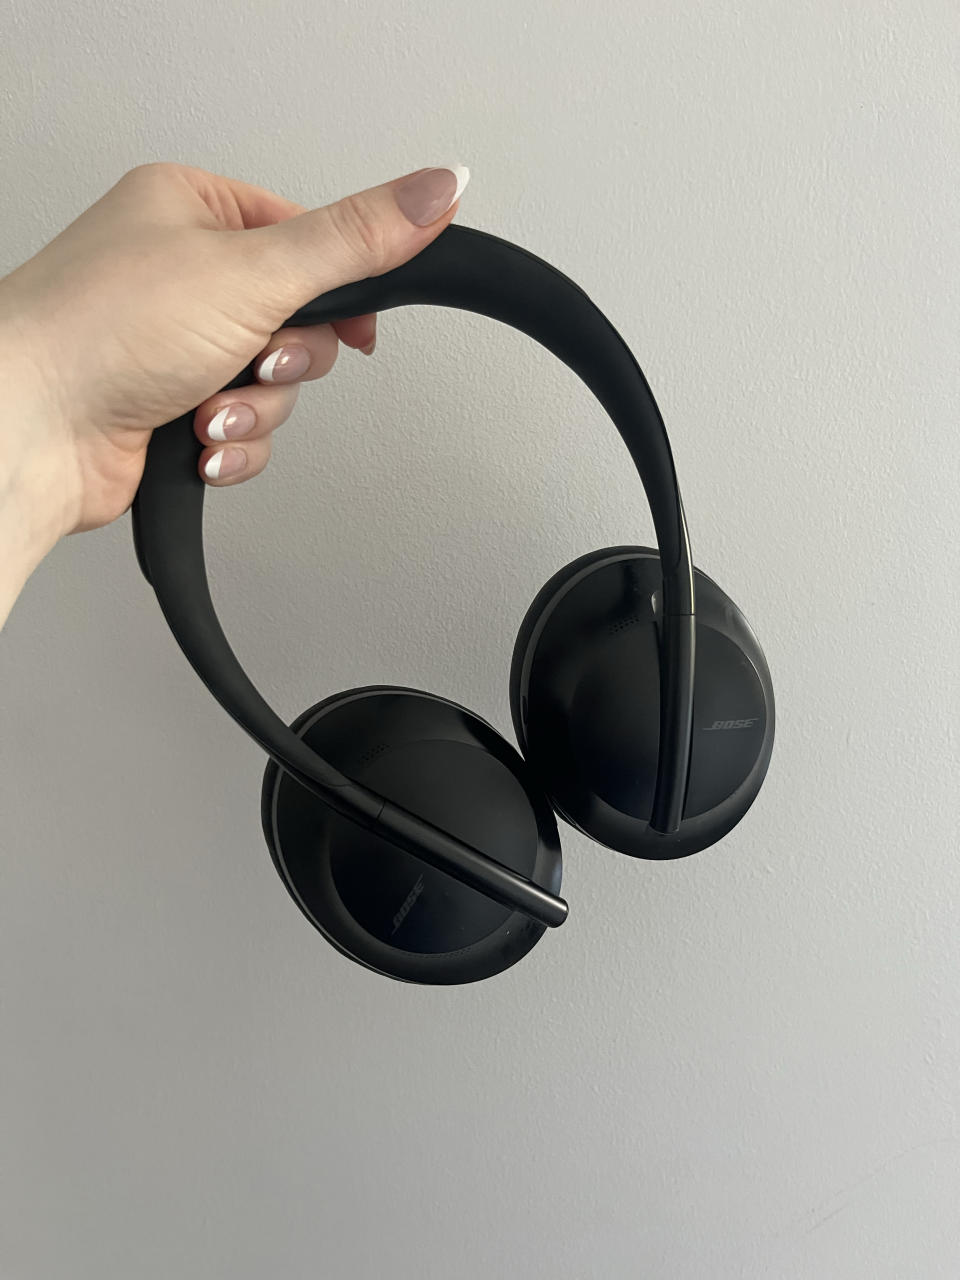 I use them everyday for work calls, listening to music and enjoying podcasts. (Yahoo Life UK)